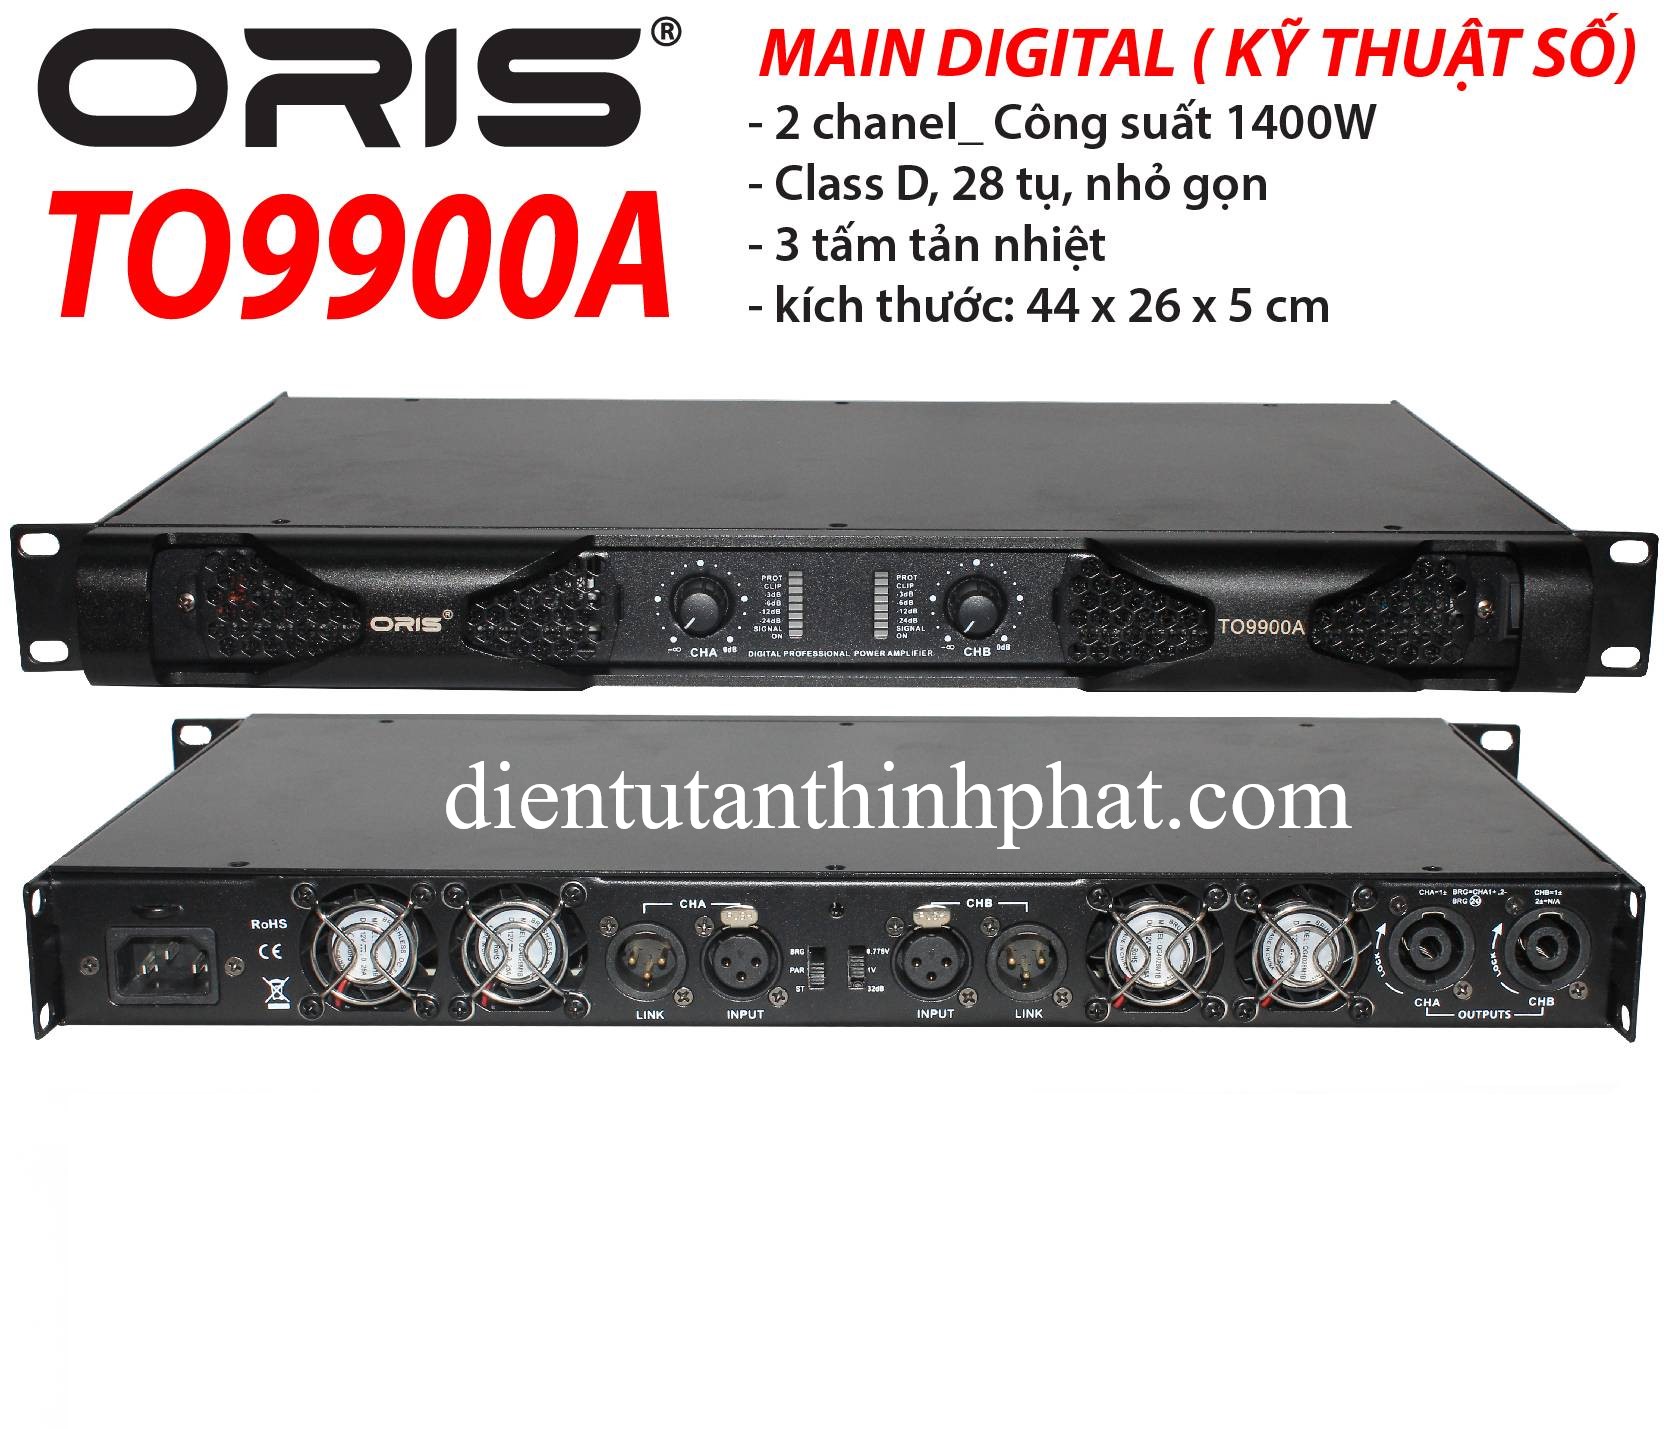 Main kỹ thuật số oris TO-9900A